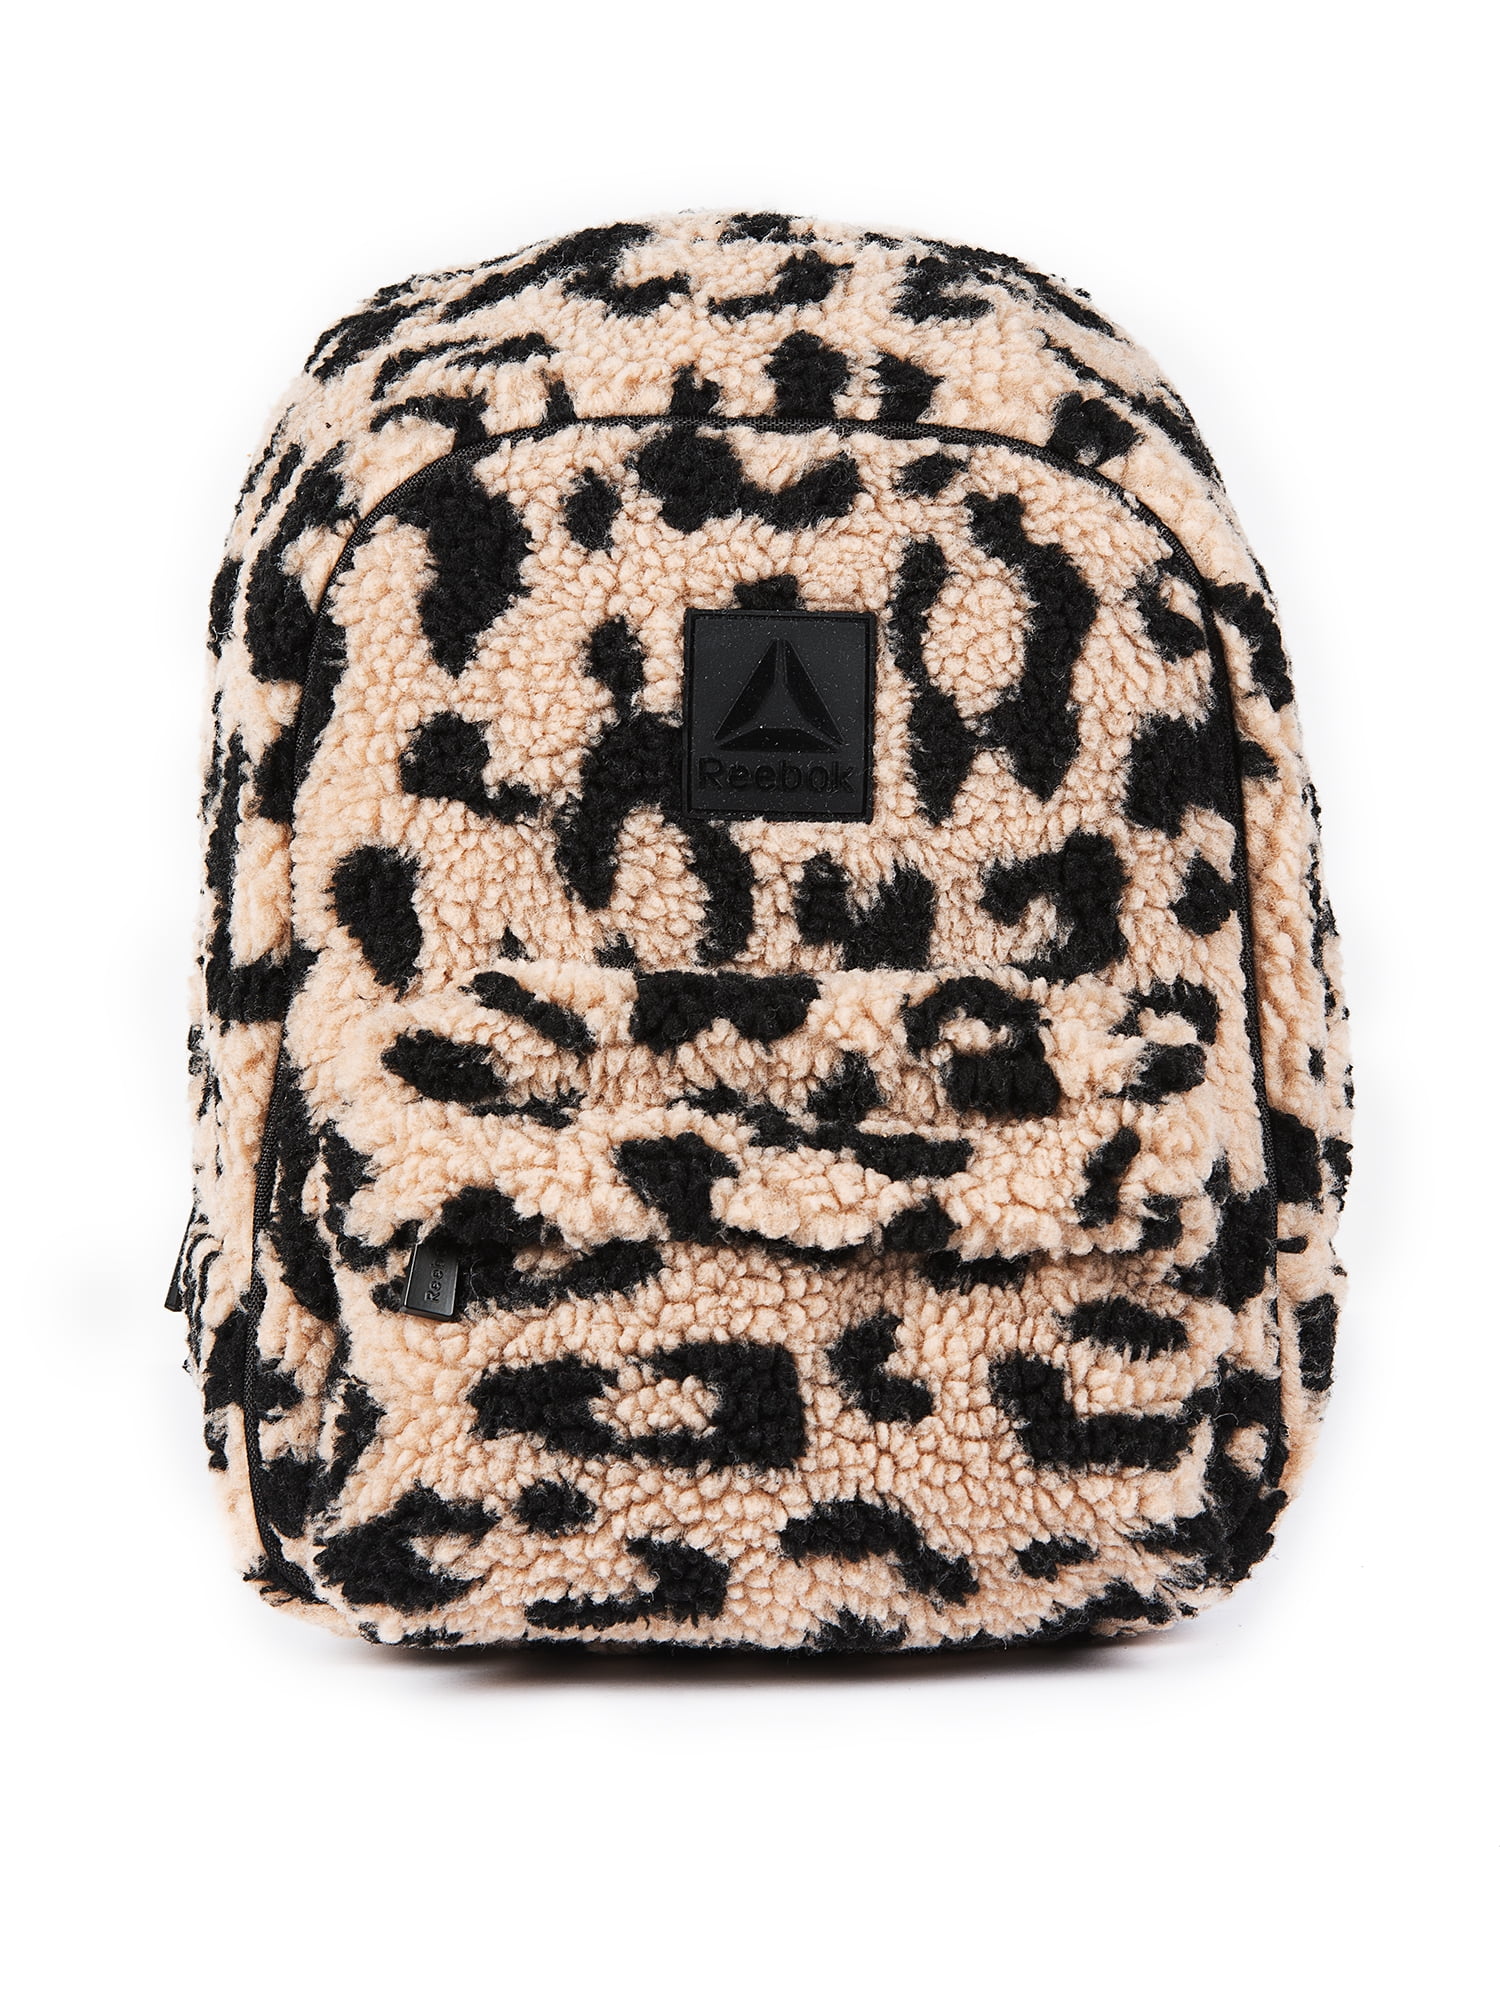 Justice Cheetah Girls Mini Backpack - Cute Mini Travel Daypack